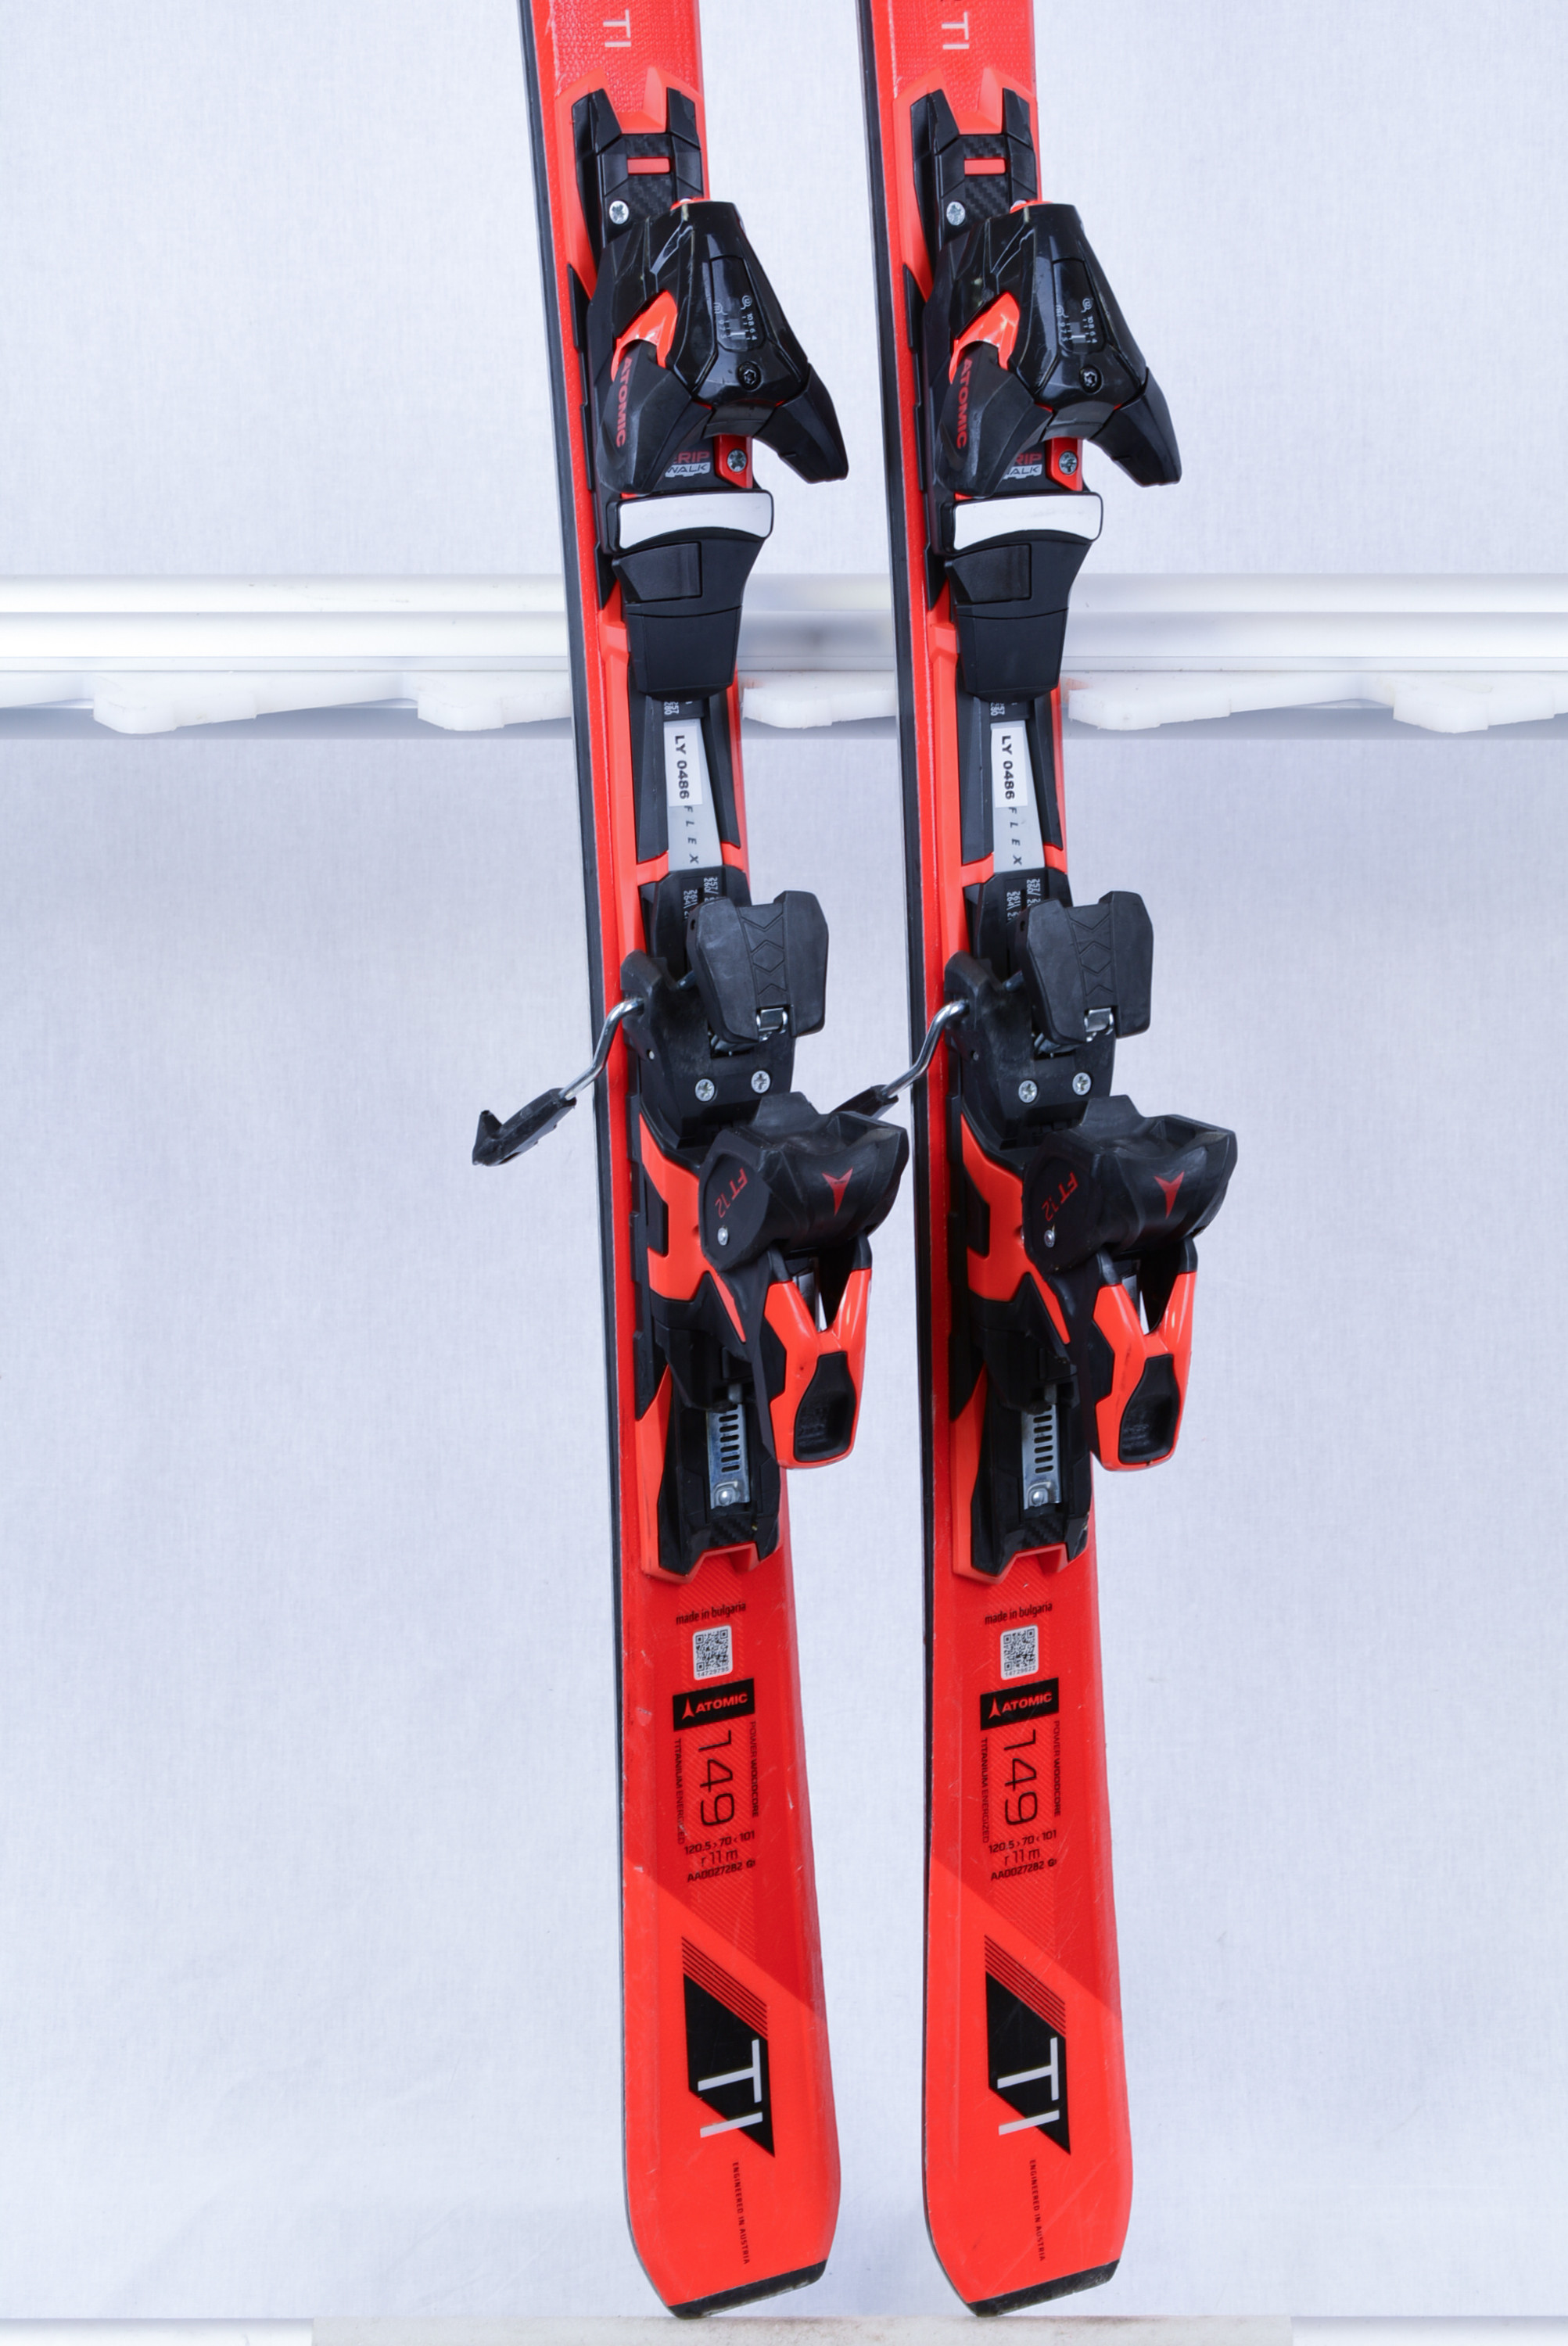 skis REDSTER TI 2019 RED, woodcore, titanium + Atomic FT 12 ( condition ) - Mardosport.com